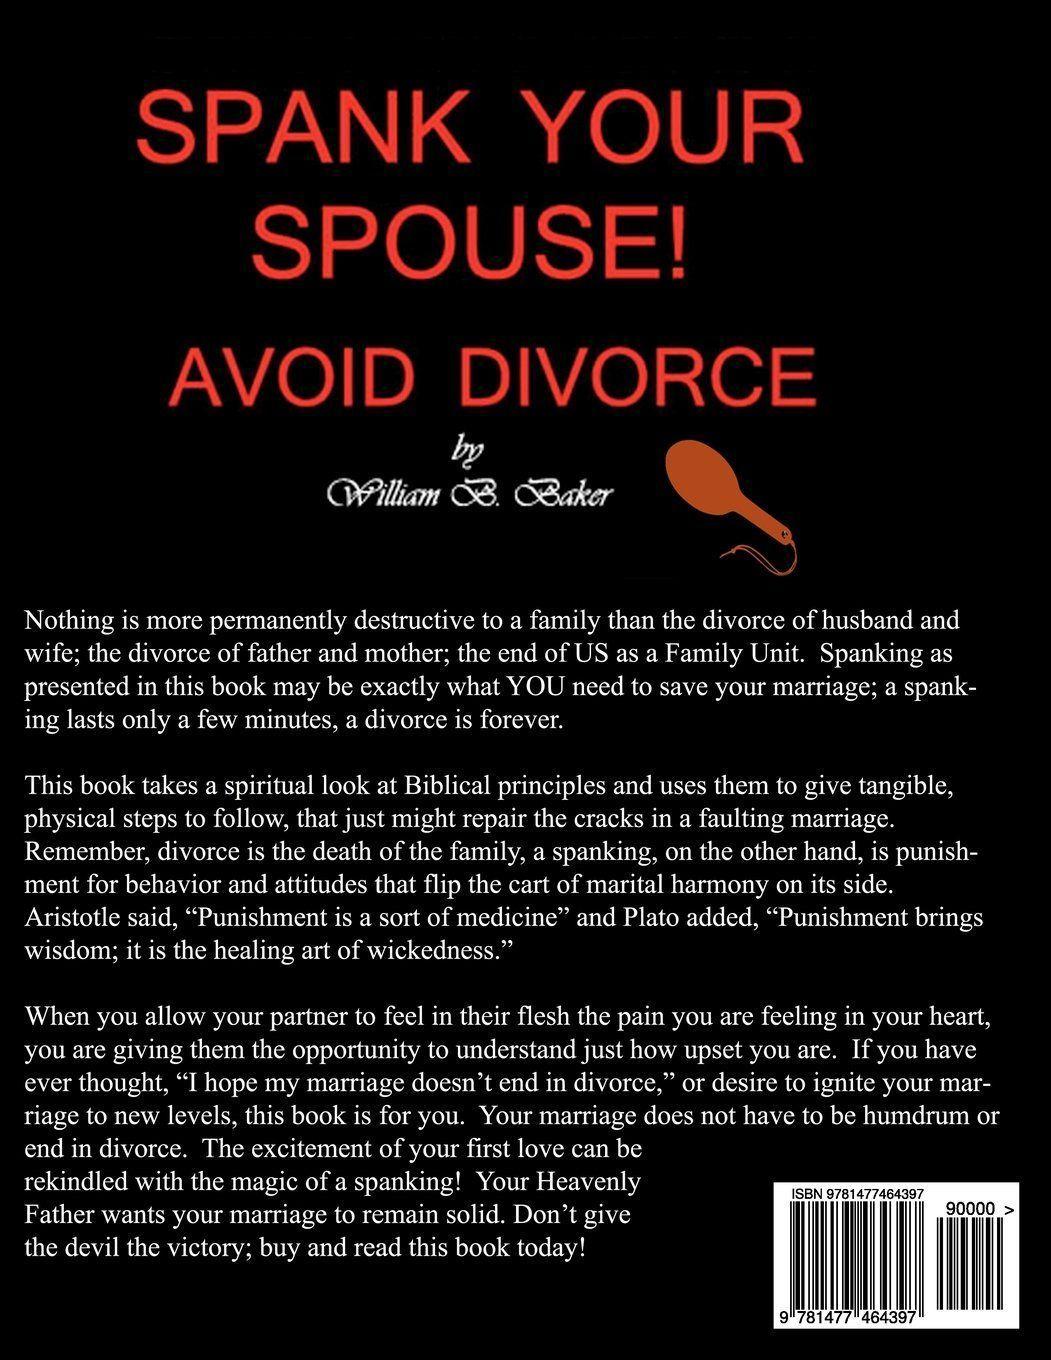 Spank wife advice